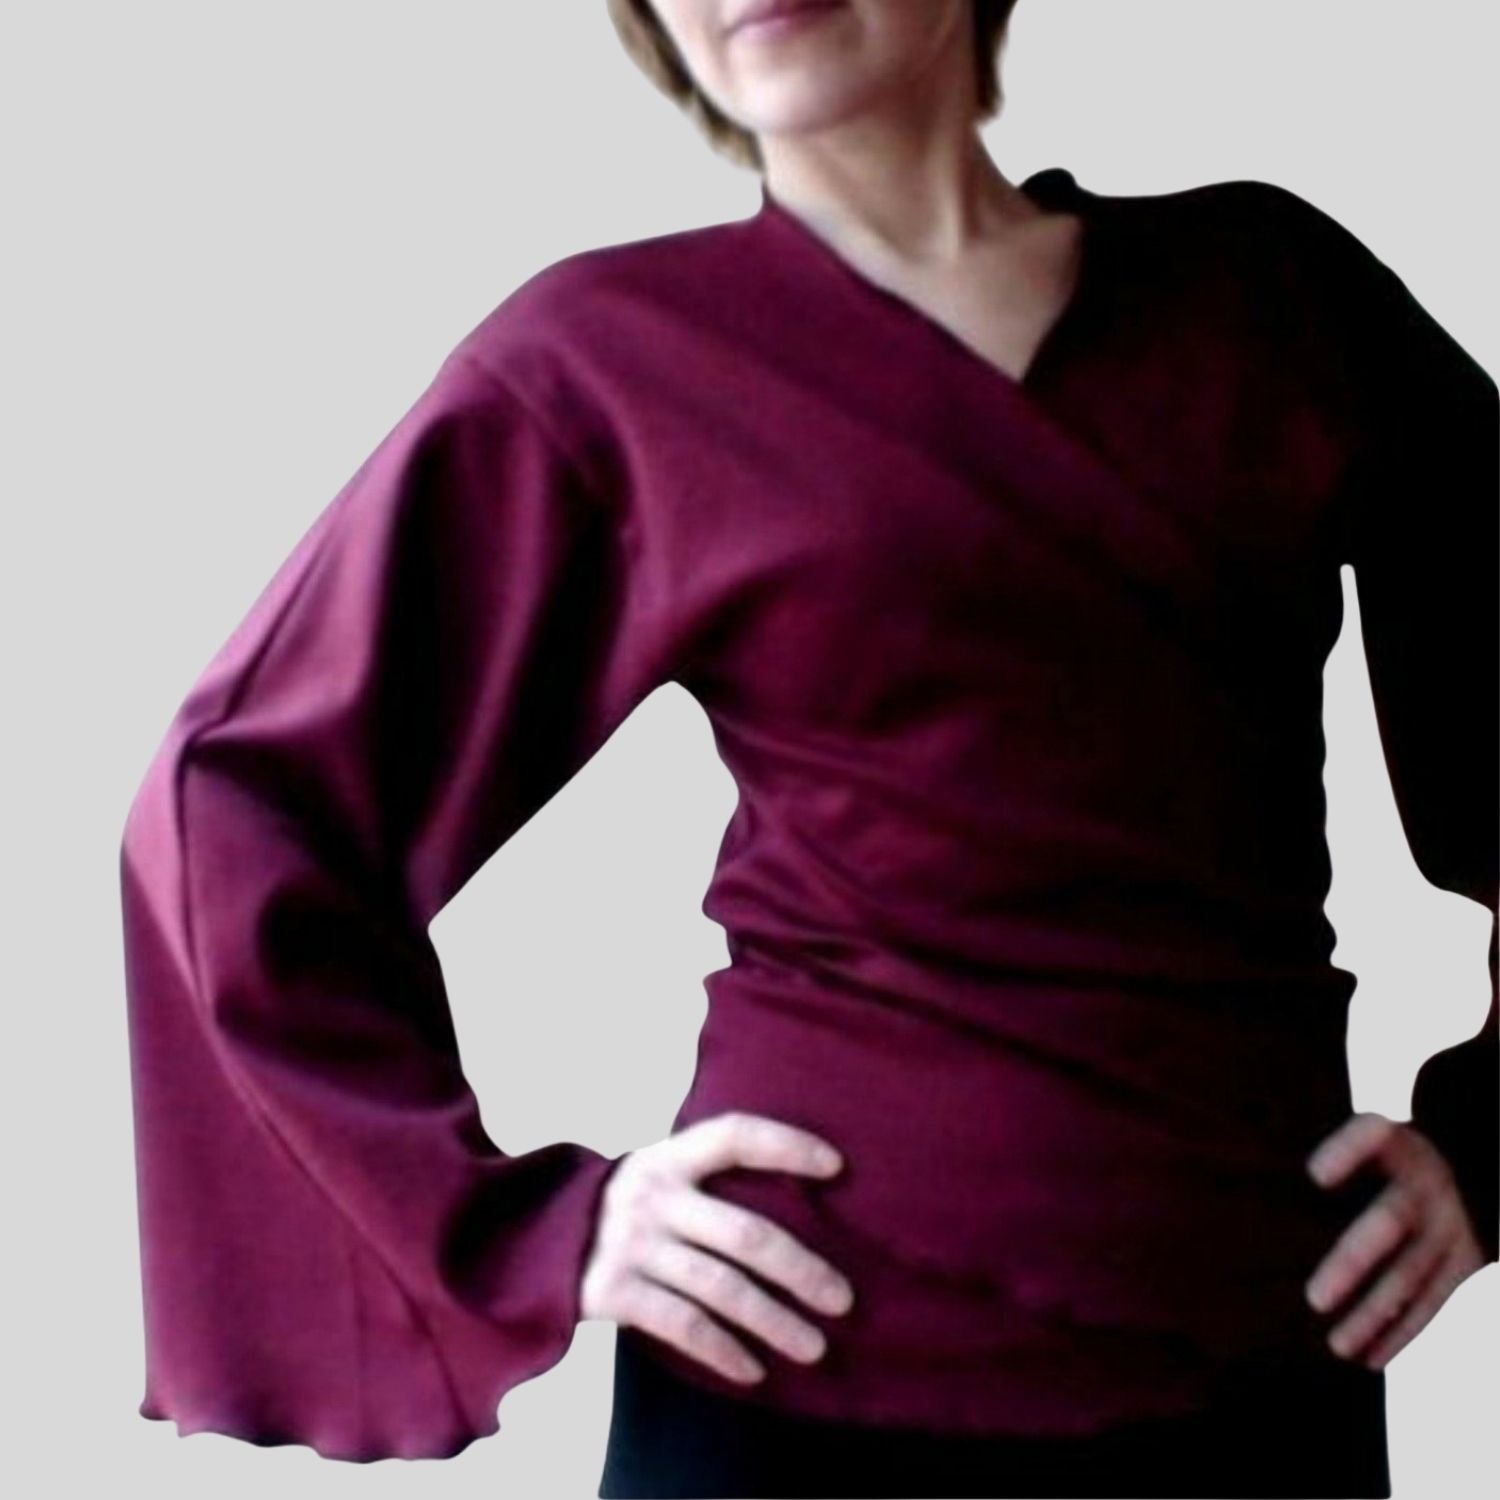 Buy kimono sleeve top | Made in Canada kimono wrap tops | Best kimono sleeve wrap shirts for women | Organic cotton clothing shop Econica